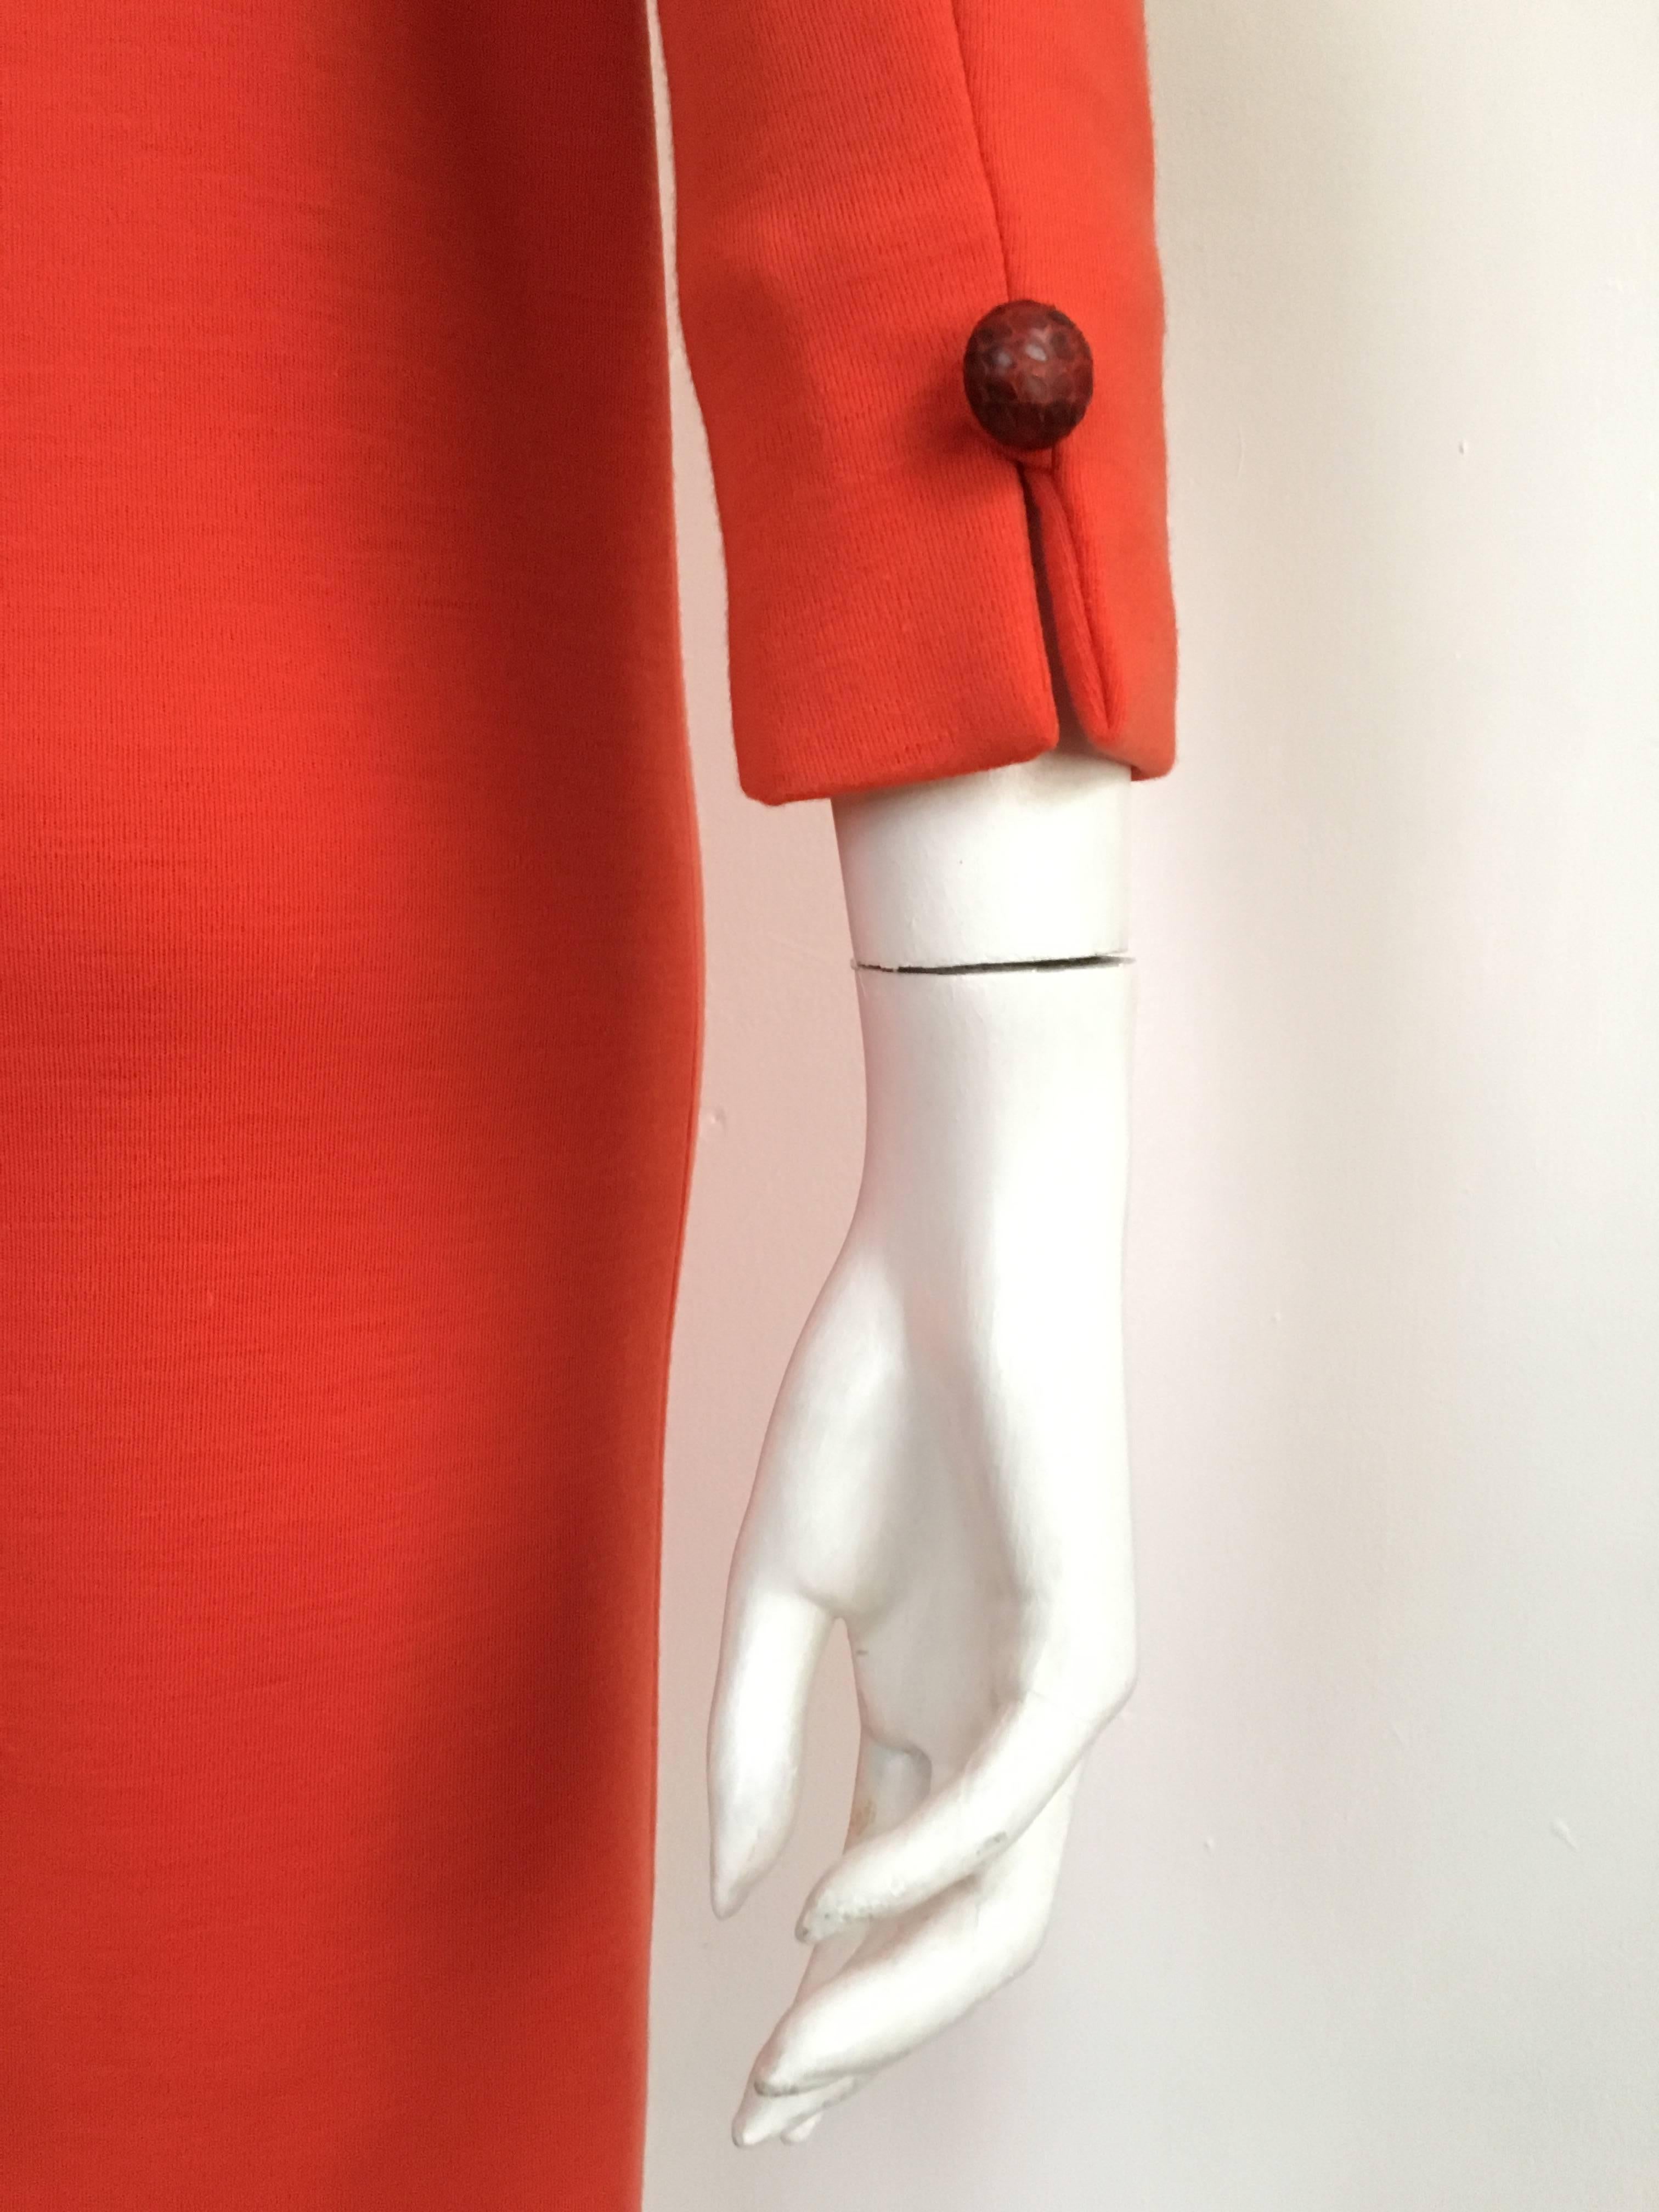 Women's Bill Blass for Maurice Rentner 1960s Orange Wool Knit Dress Size 6.